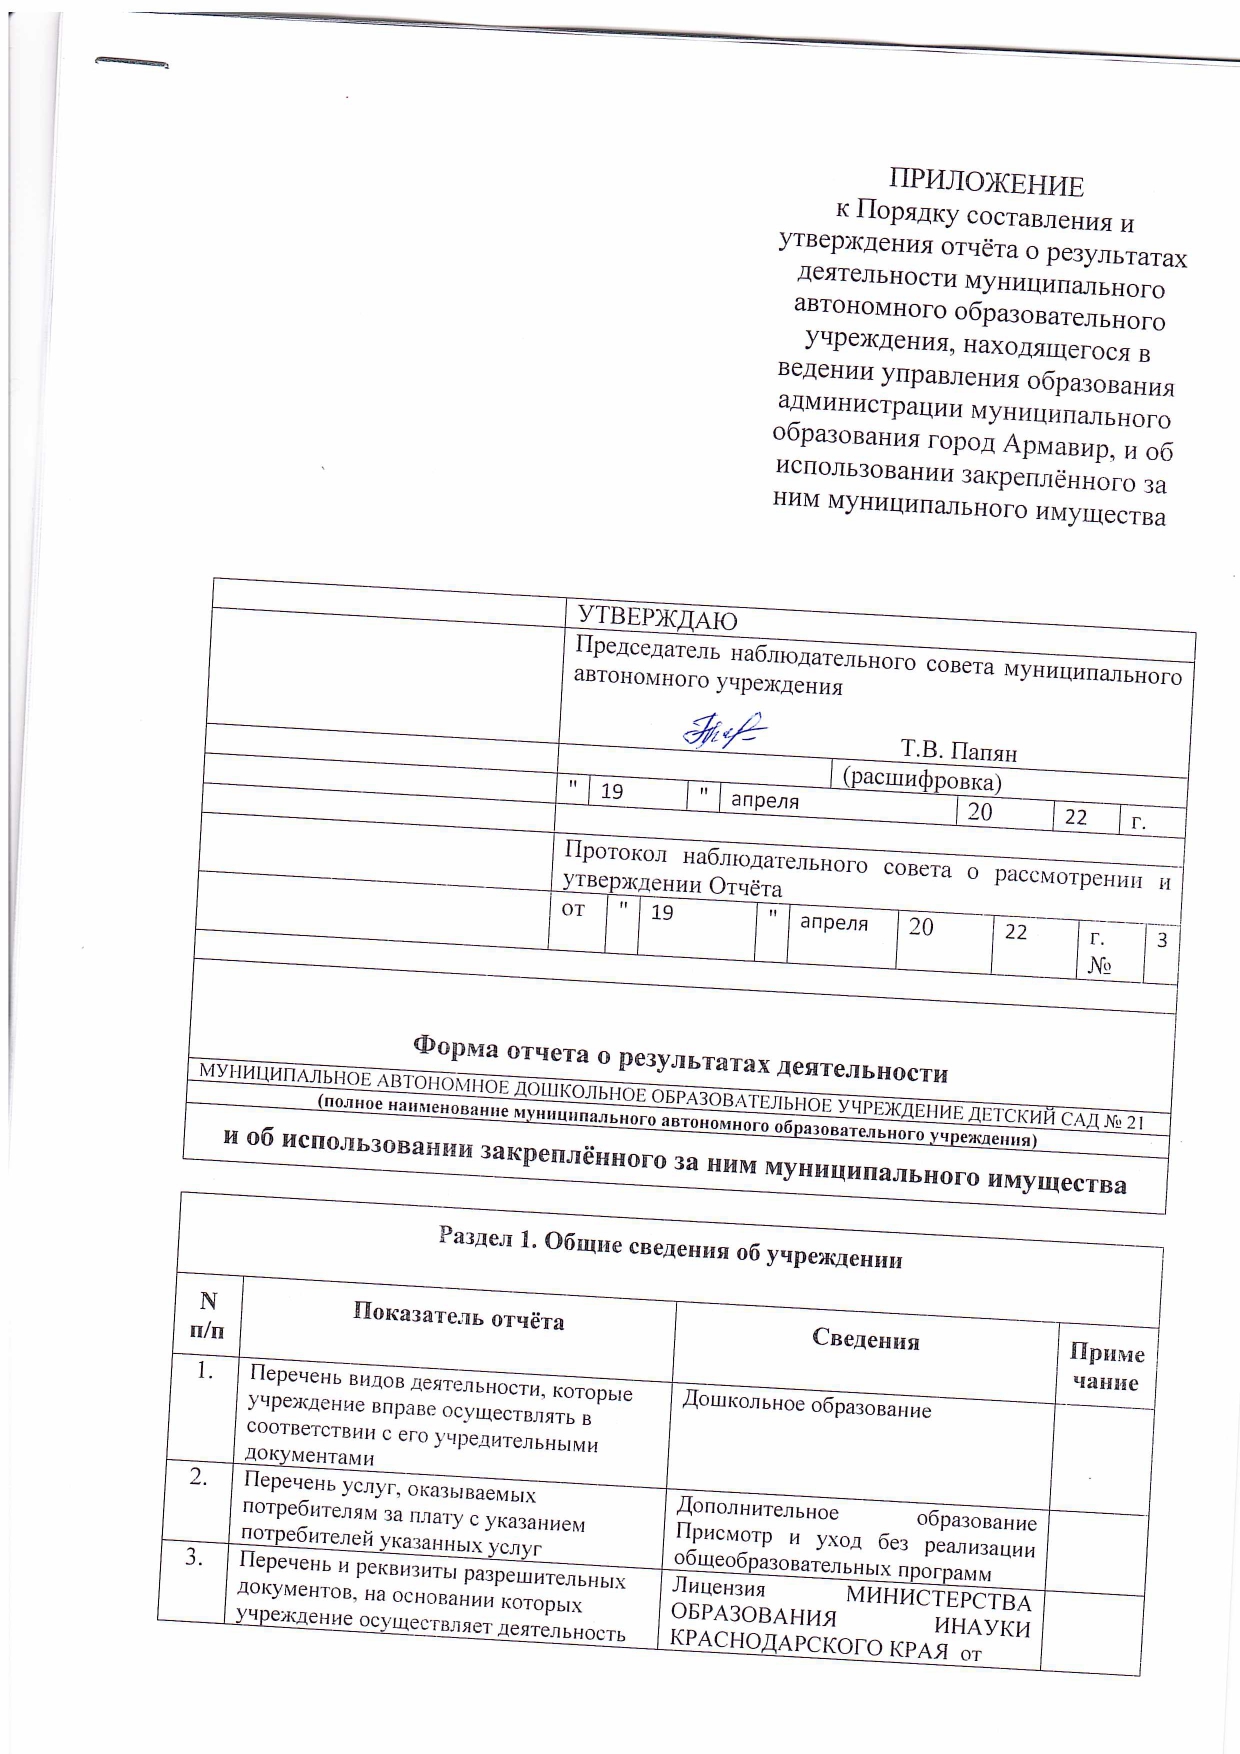 форма отчета о результатах деятельности МАДОУ № 21_page-0001.jpg